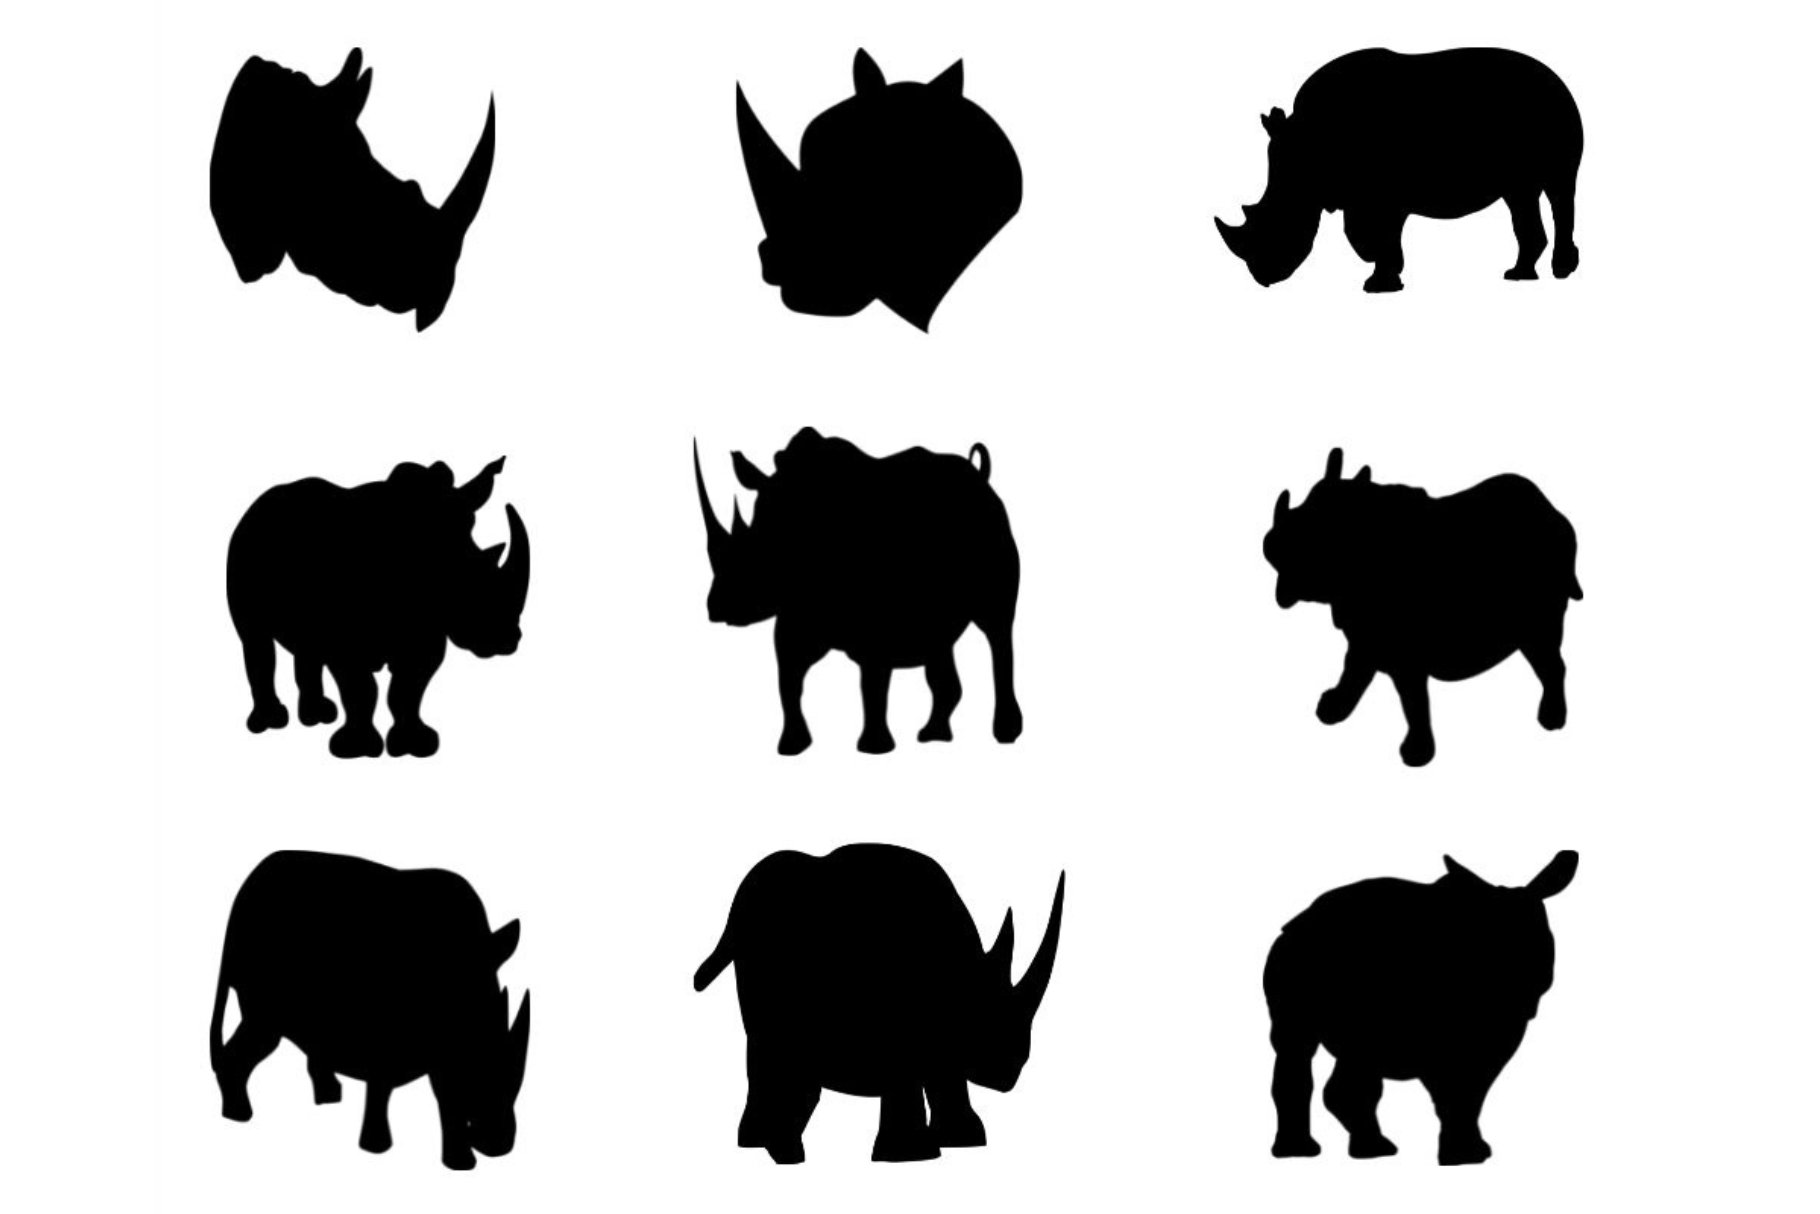 Rhino Silhouette cover image.